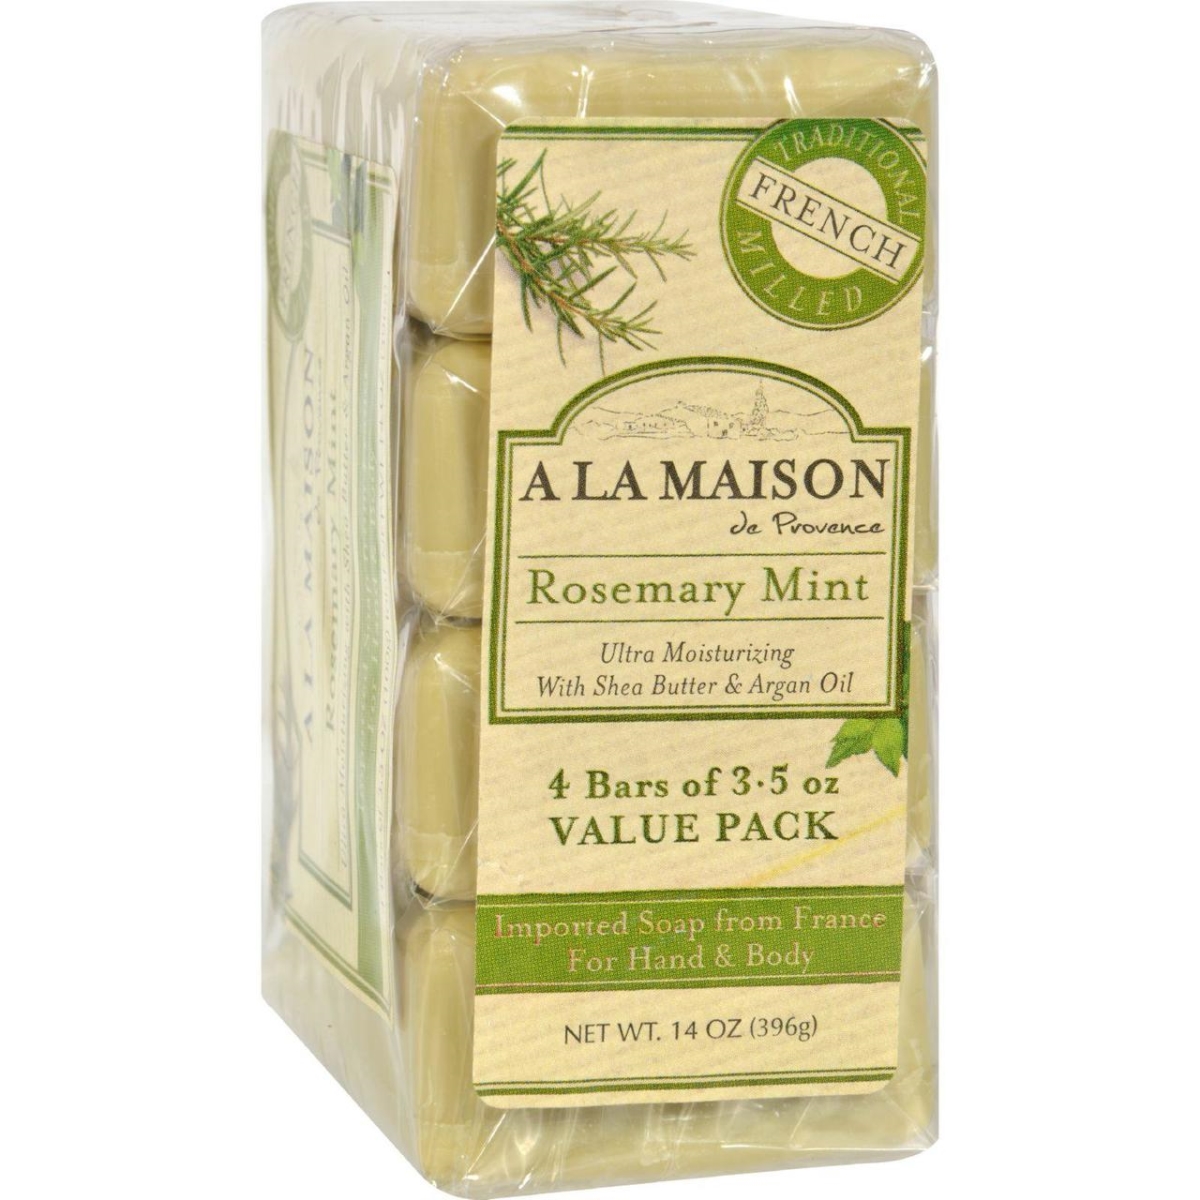 Hg1015692 Rosemary Mint Bar Soap, Pack Of 4